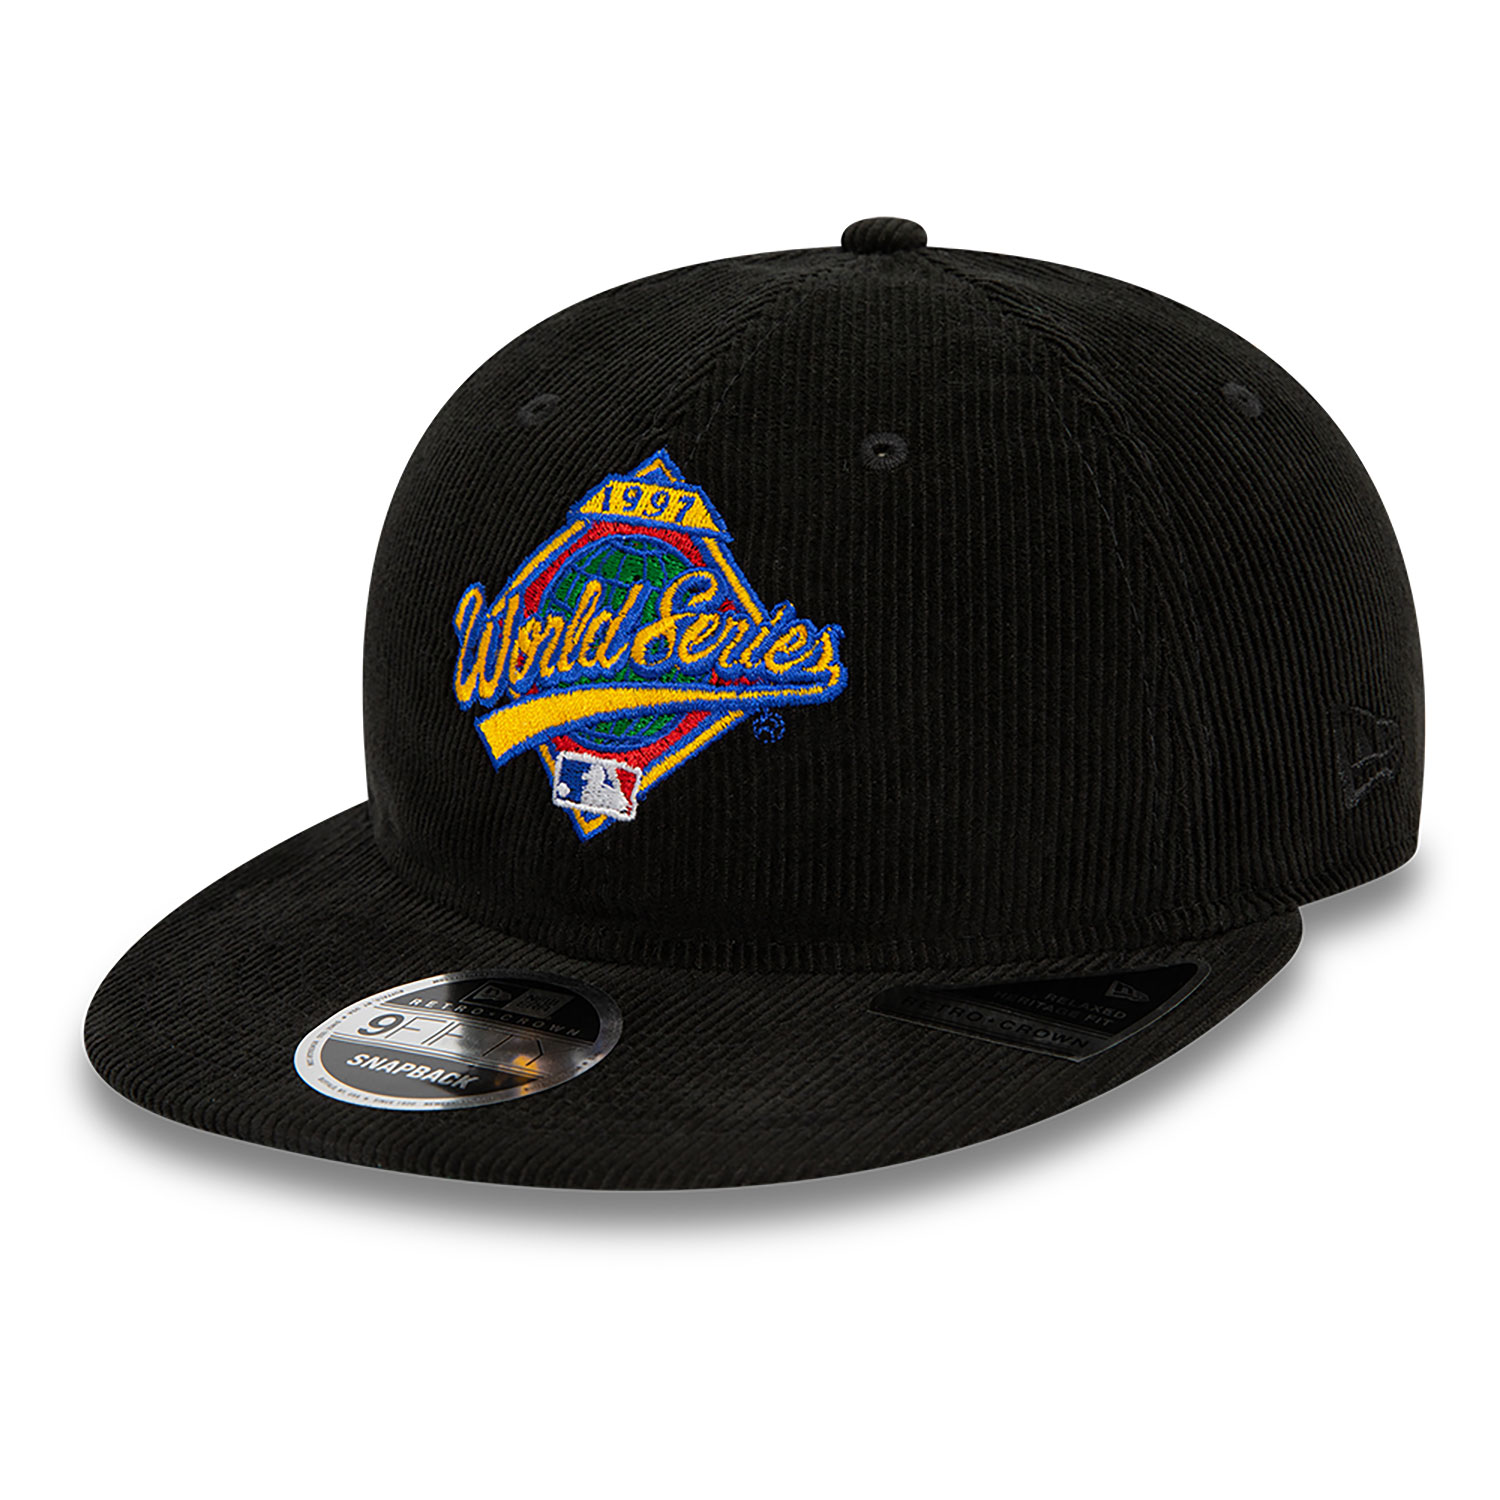 MLB World Series 1997 Patch Black Retro Crown 9FIFTY Snapback Cap